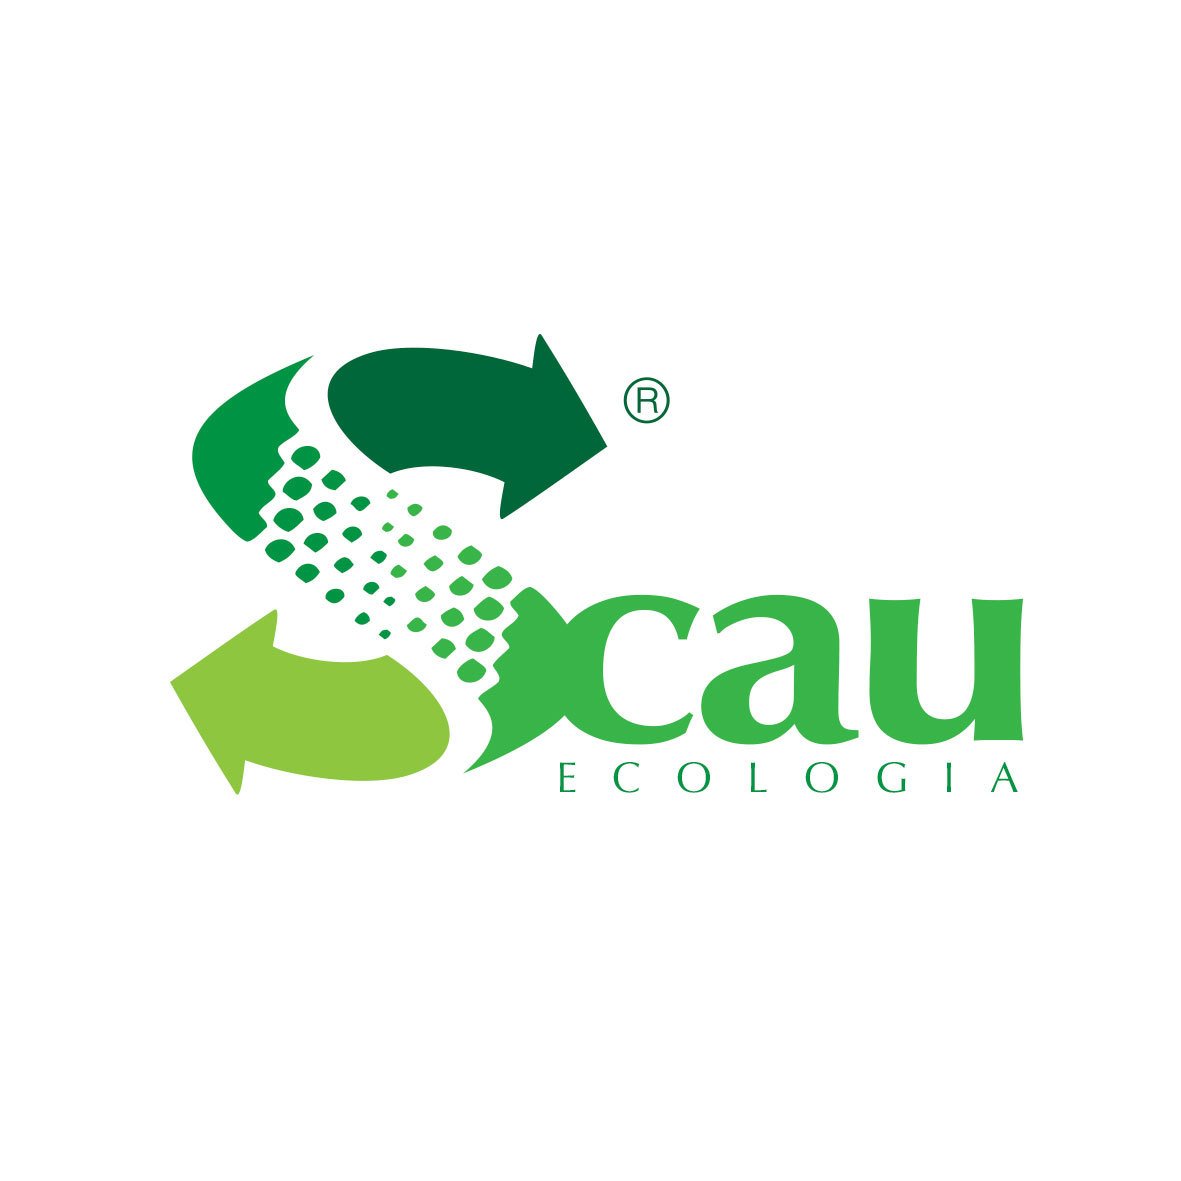 Scau Ecologica - 2018